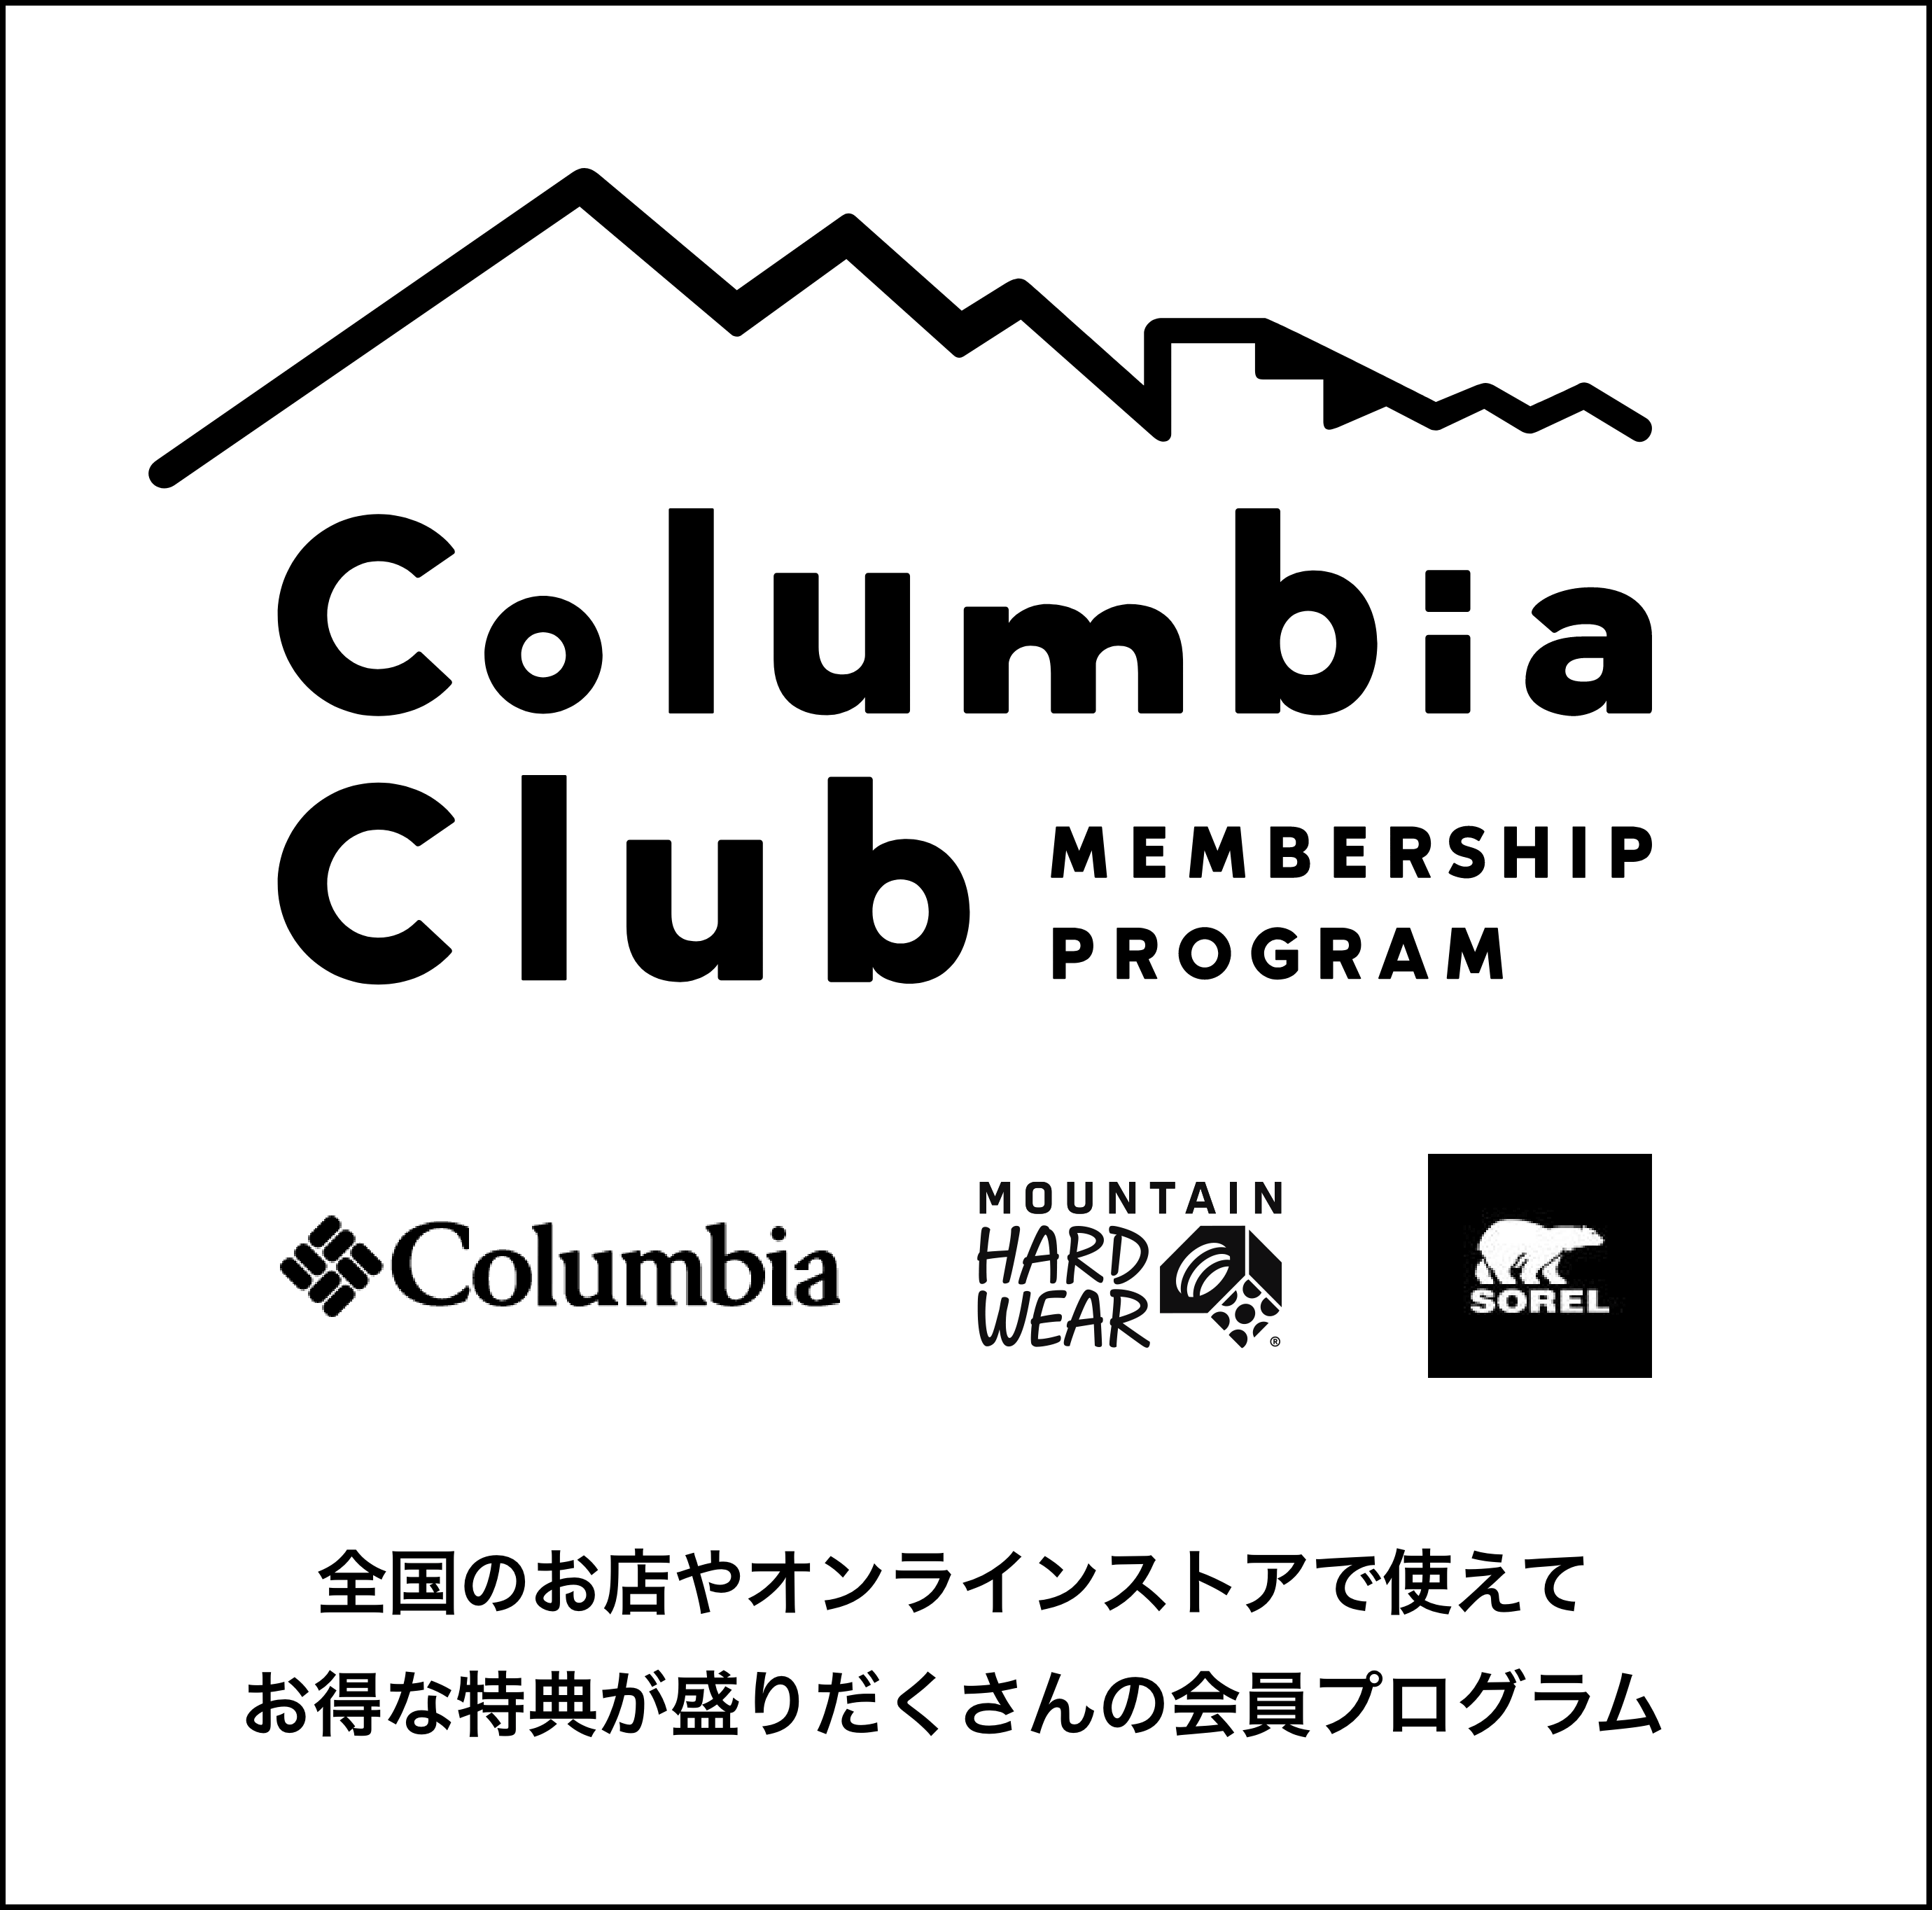 Columbia Club MEMBERSHIO PROGRAM 全国のお店やオンラインストアで使えてお得な特典が盛りだくさんの会員プログラム